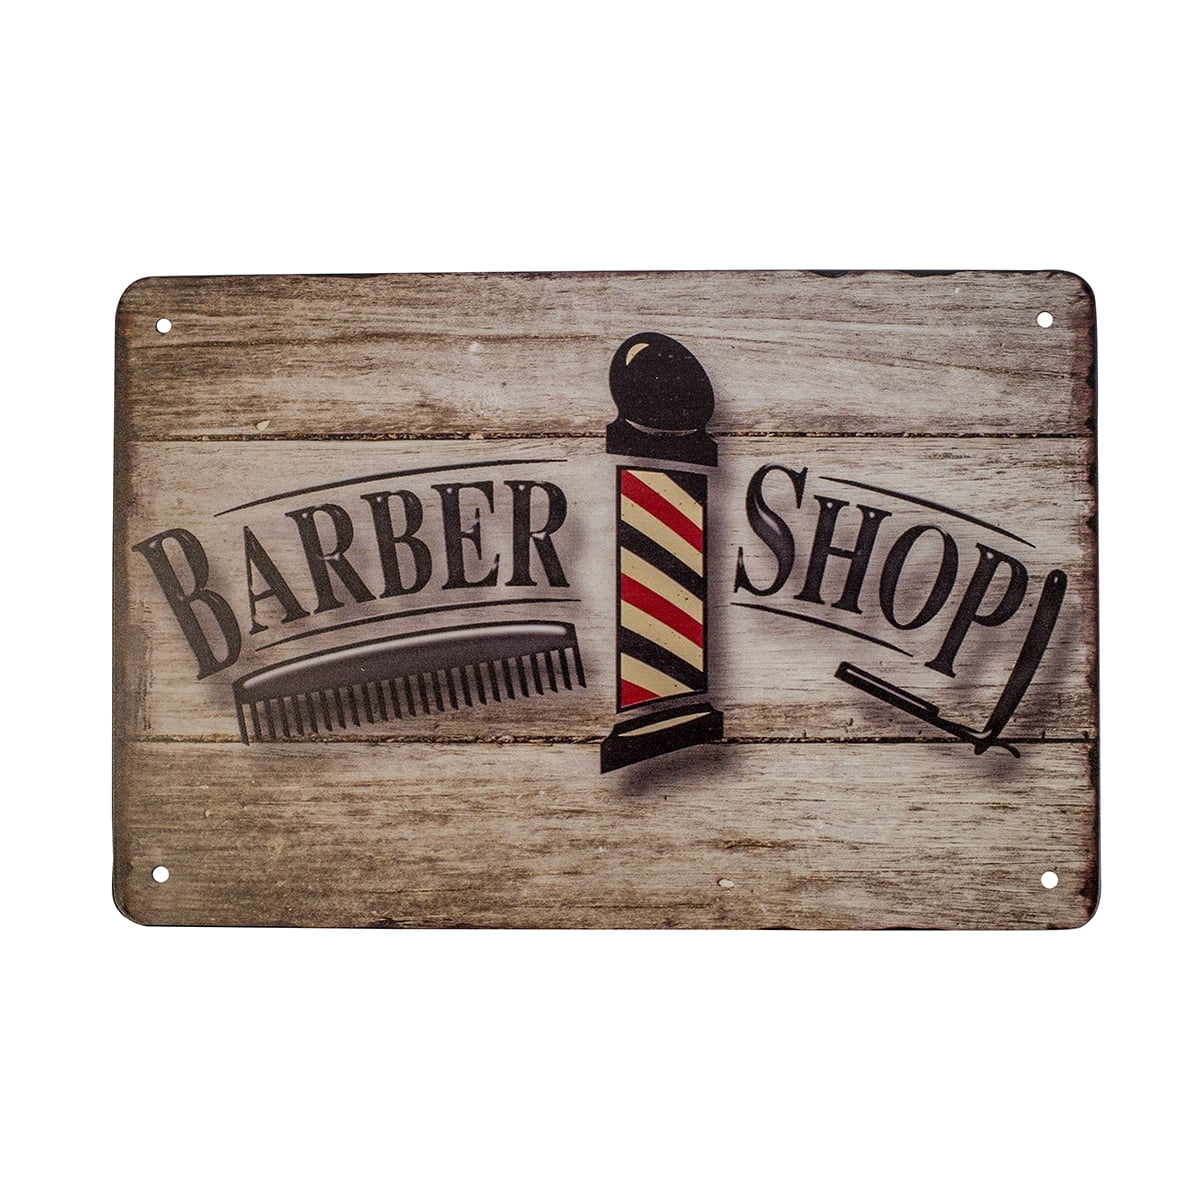 Barbershop Tin Poster Sign Barber Shop Mens Grooming Shaving Vintage Ad Style 